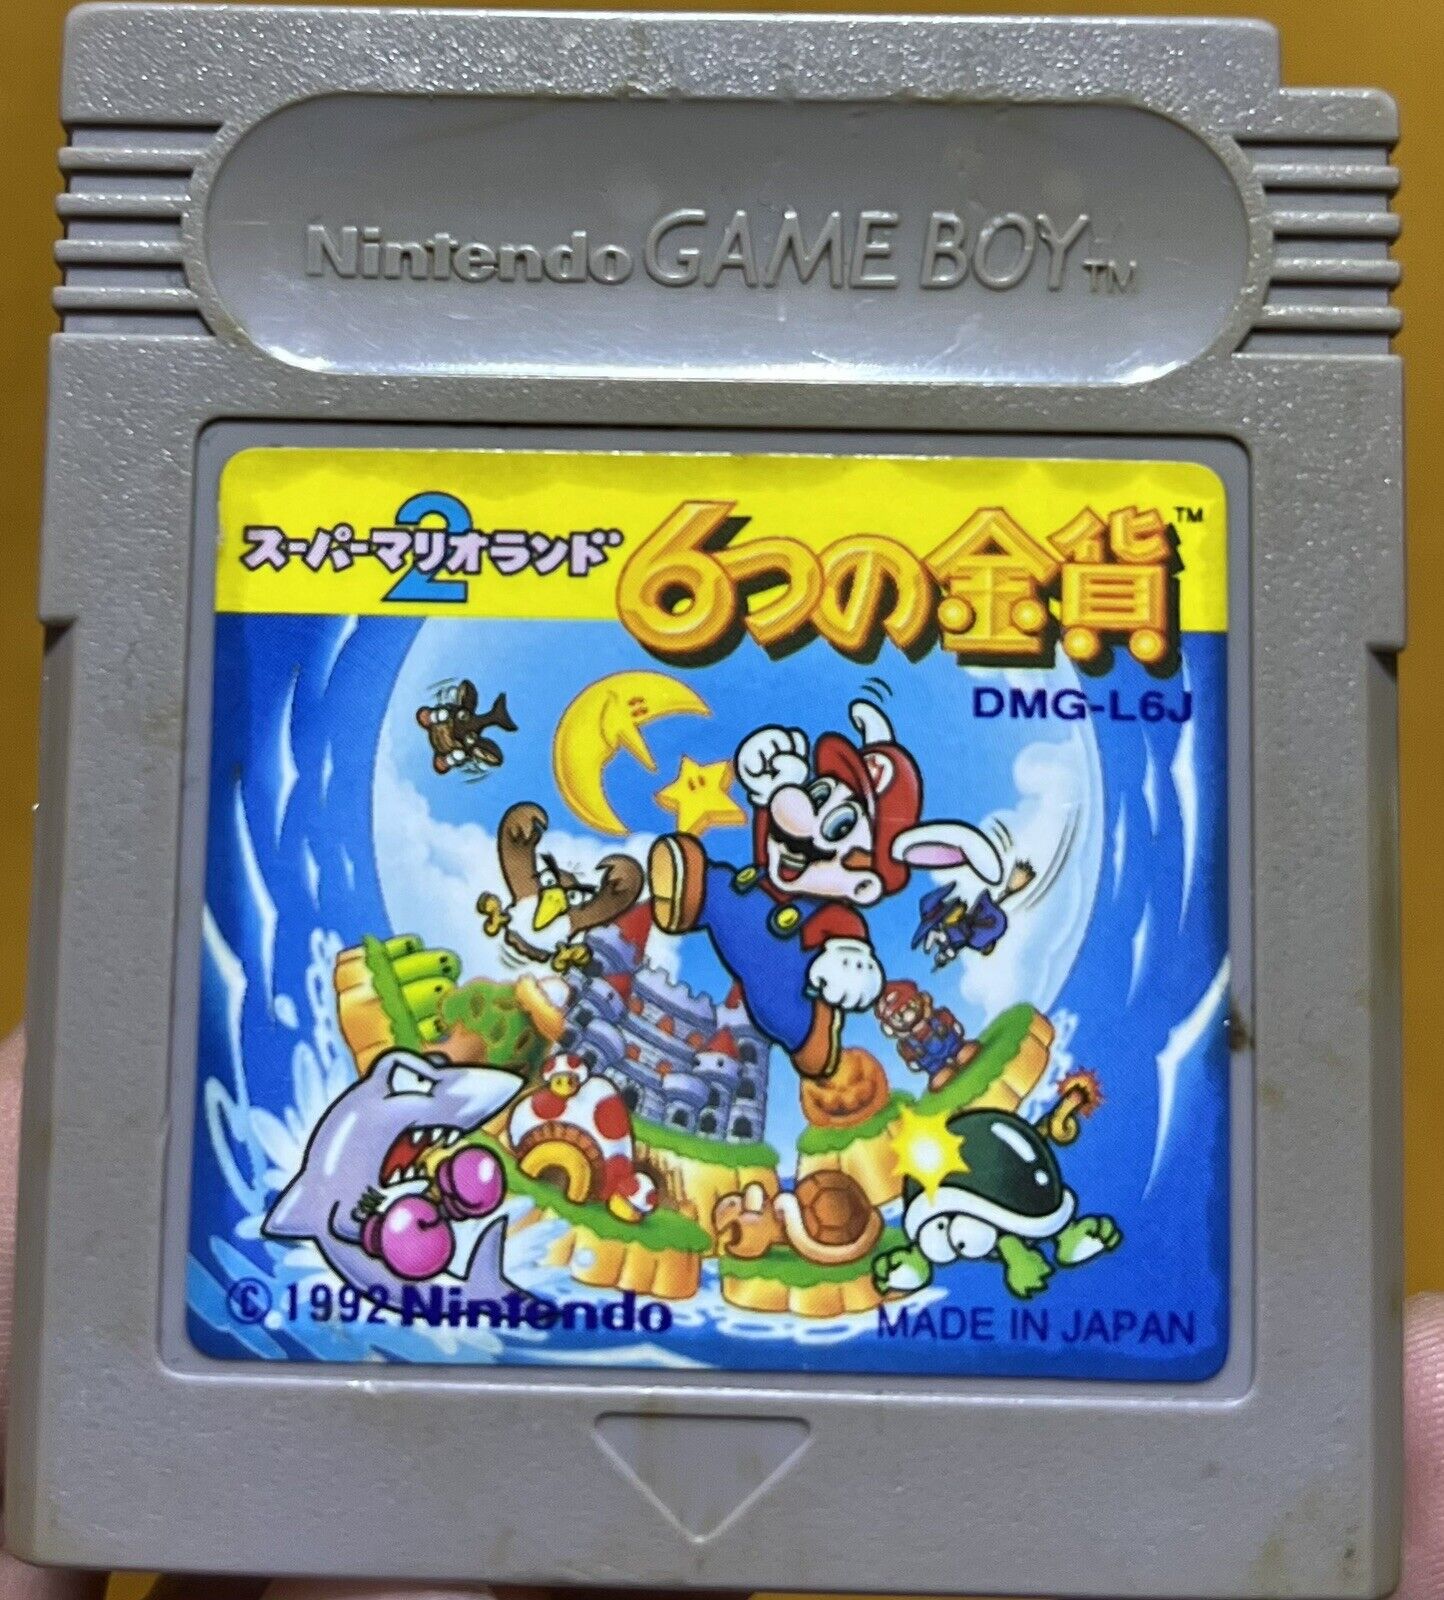 Super Mario Land 2 (Nintendo Game Boy, 1992), Japanese